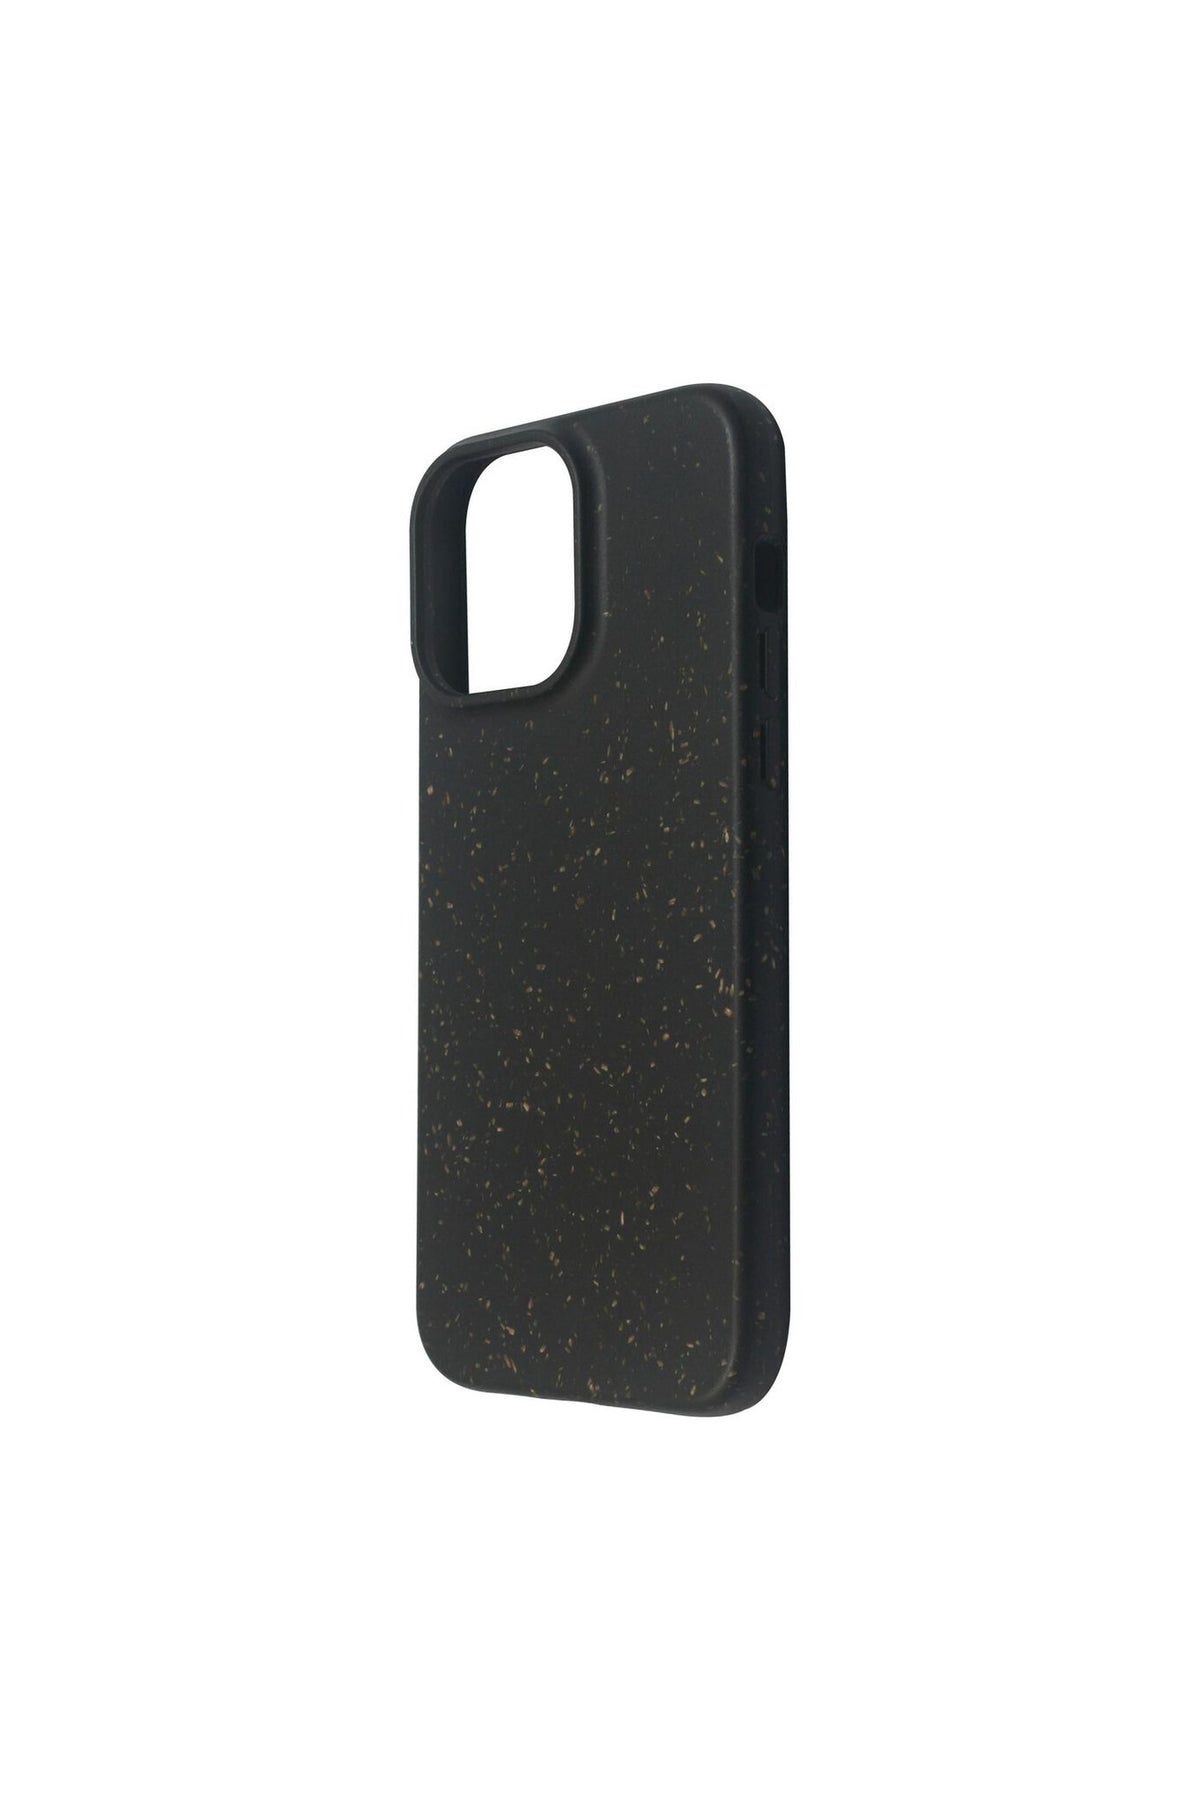 eSTUFF COPENHAGEN 100% Biodegradable mobile phone case for iPhone 14 Pro Max in Black